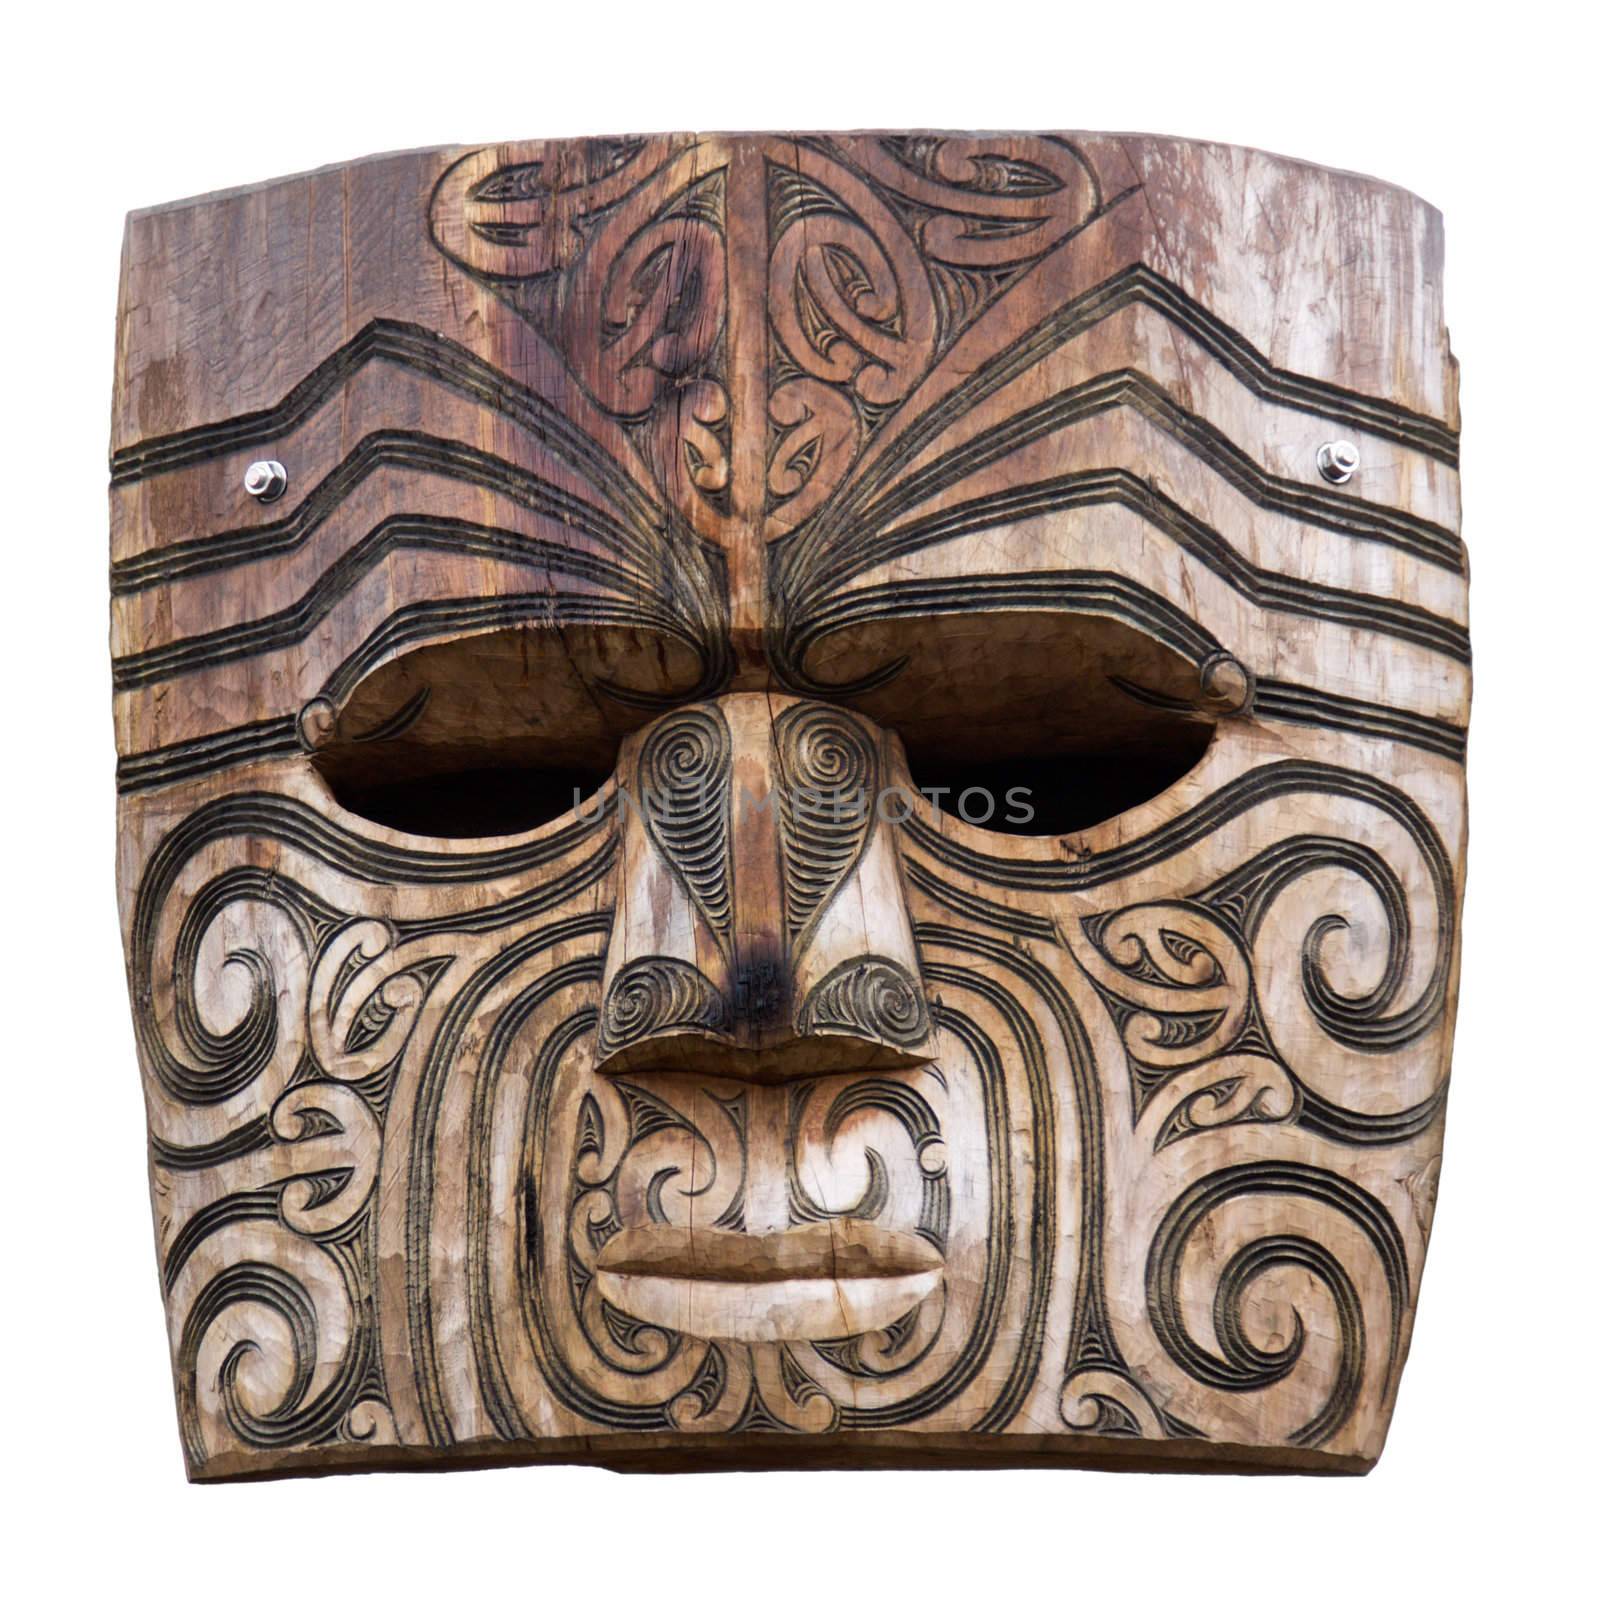 Maori carving by RuthBlack